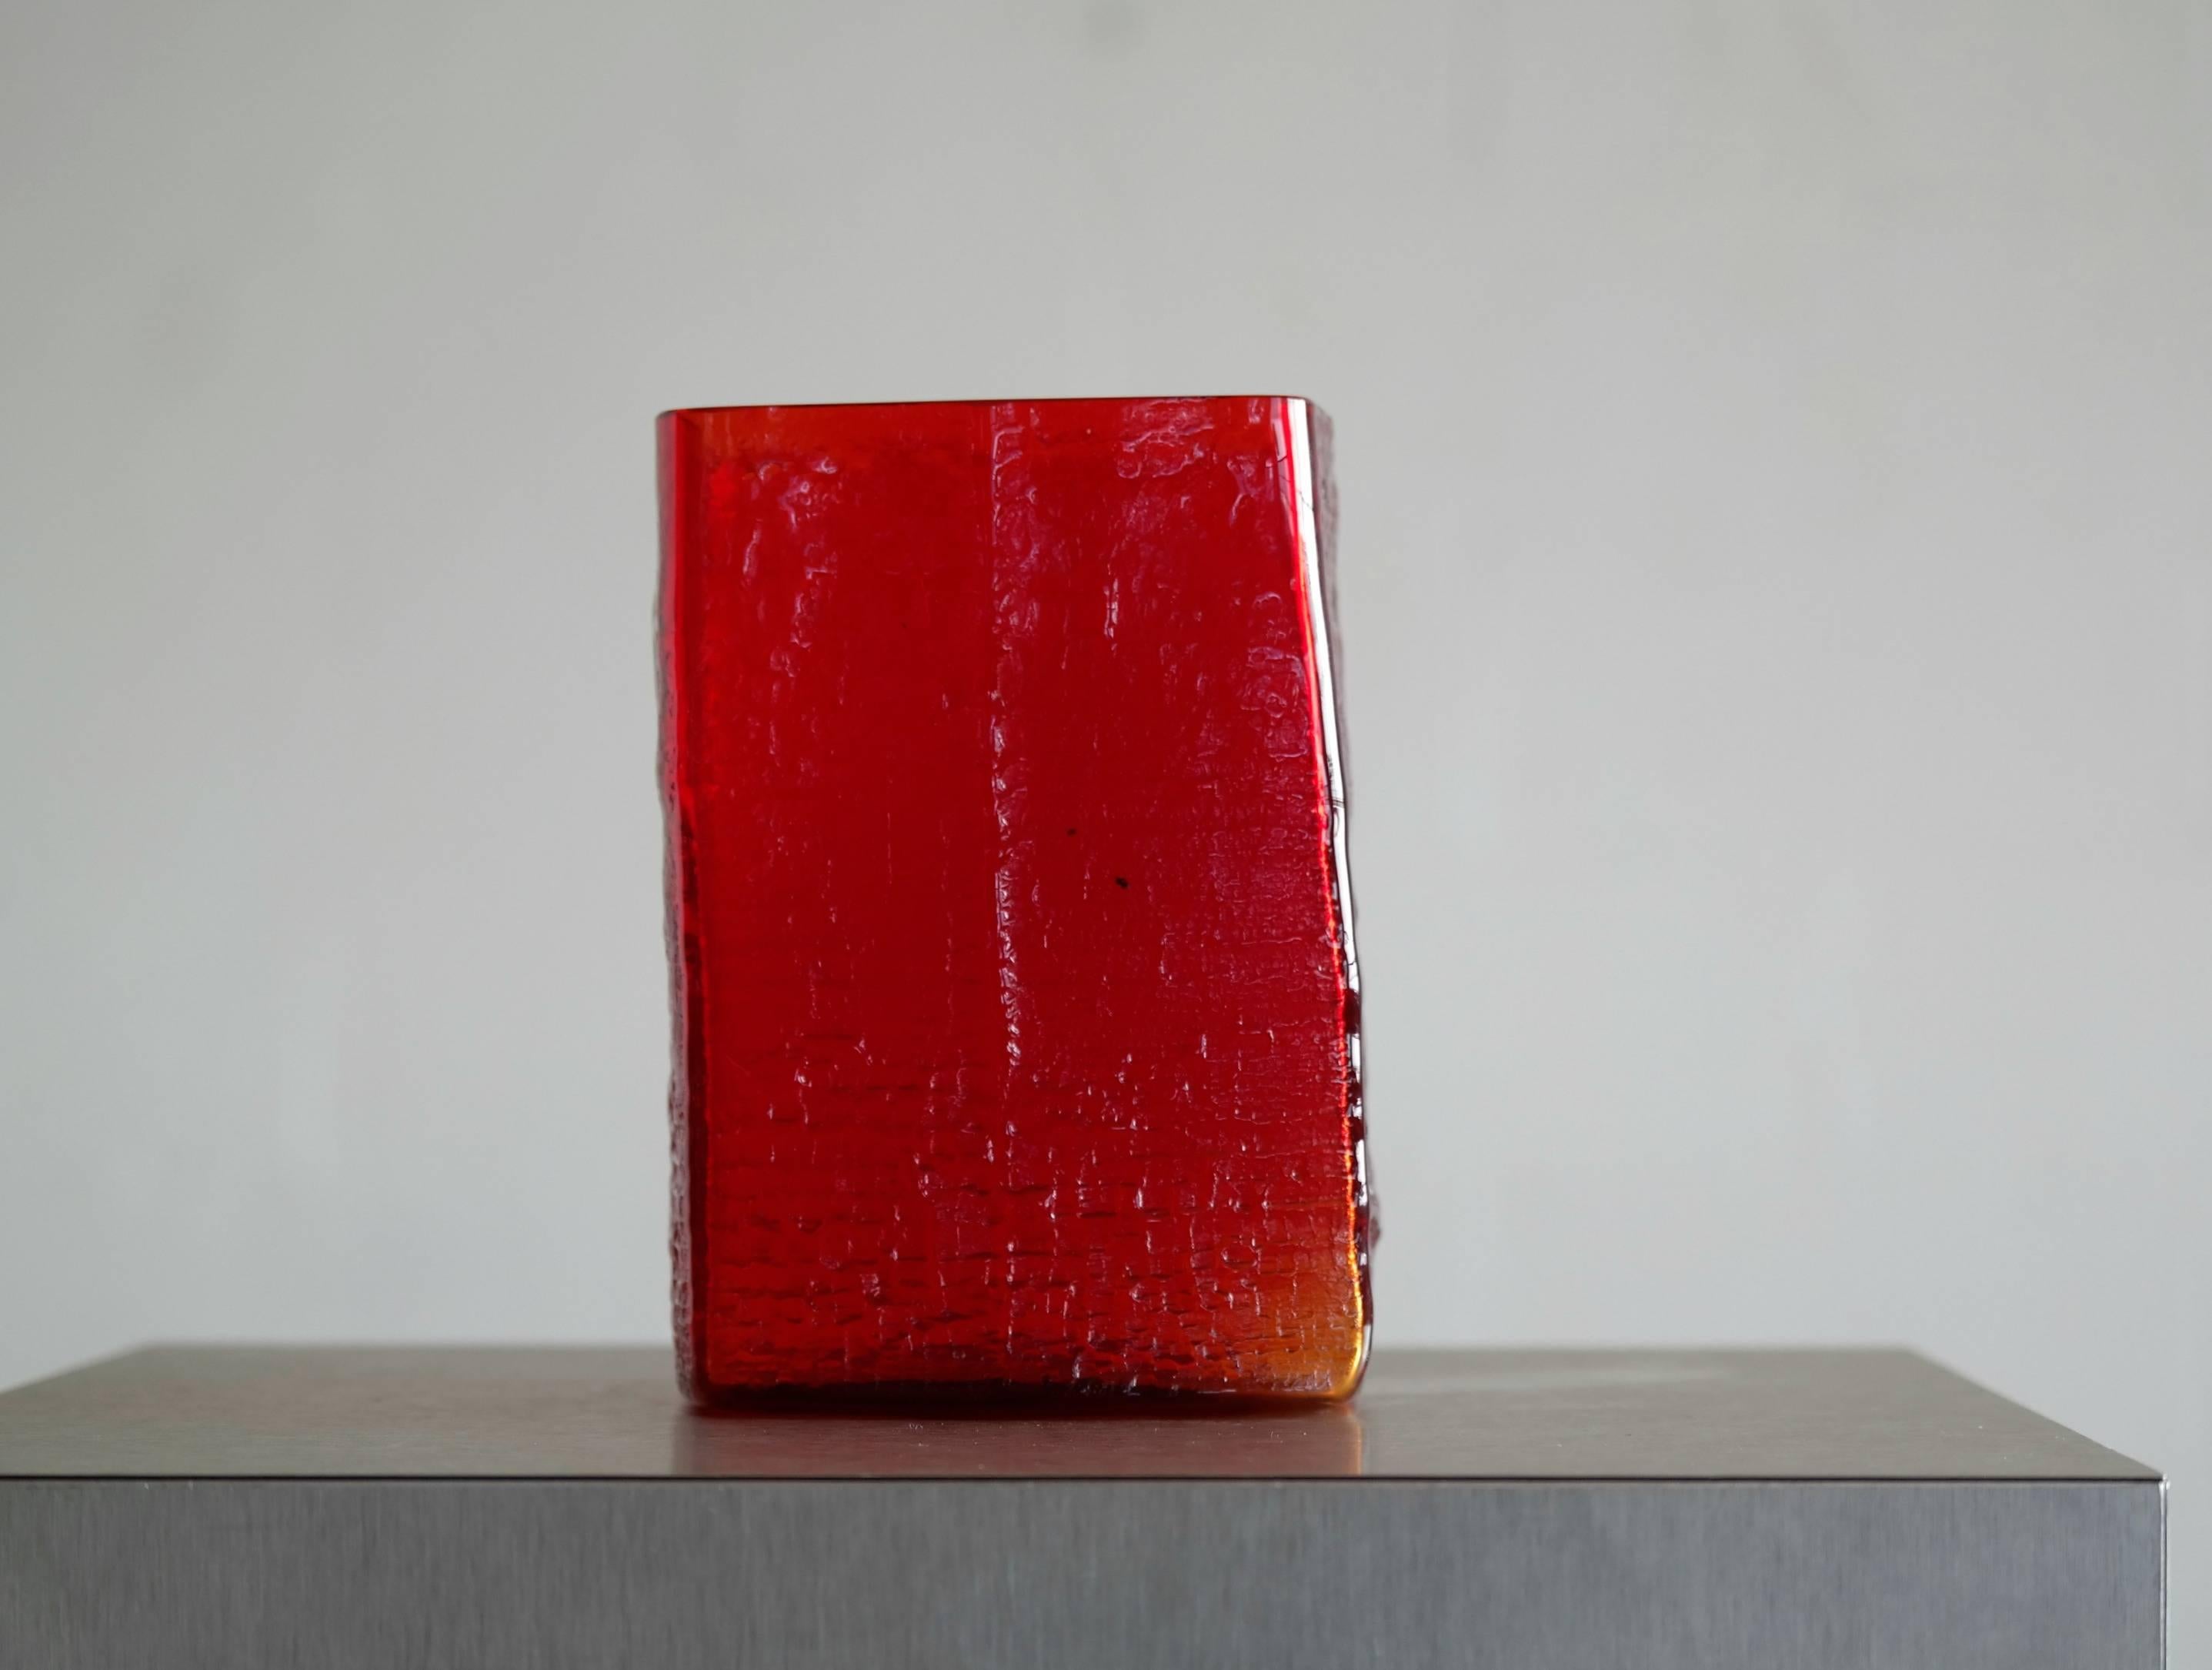 Mid-20th Century Per Lÿtken for Holmegaard Glasvaerk Red Glass Vases designed 